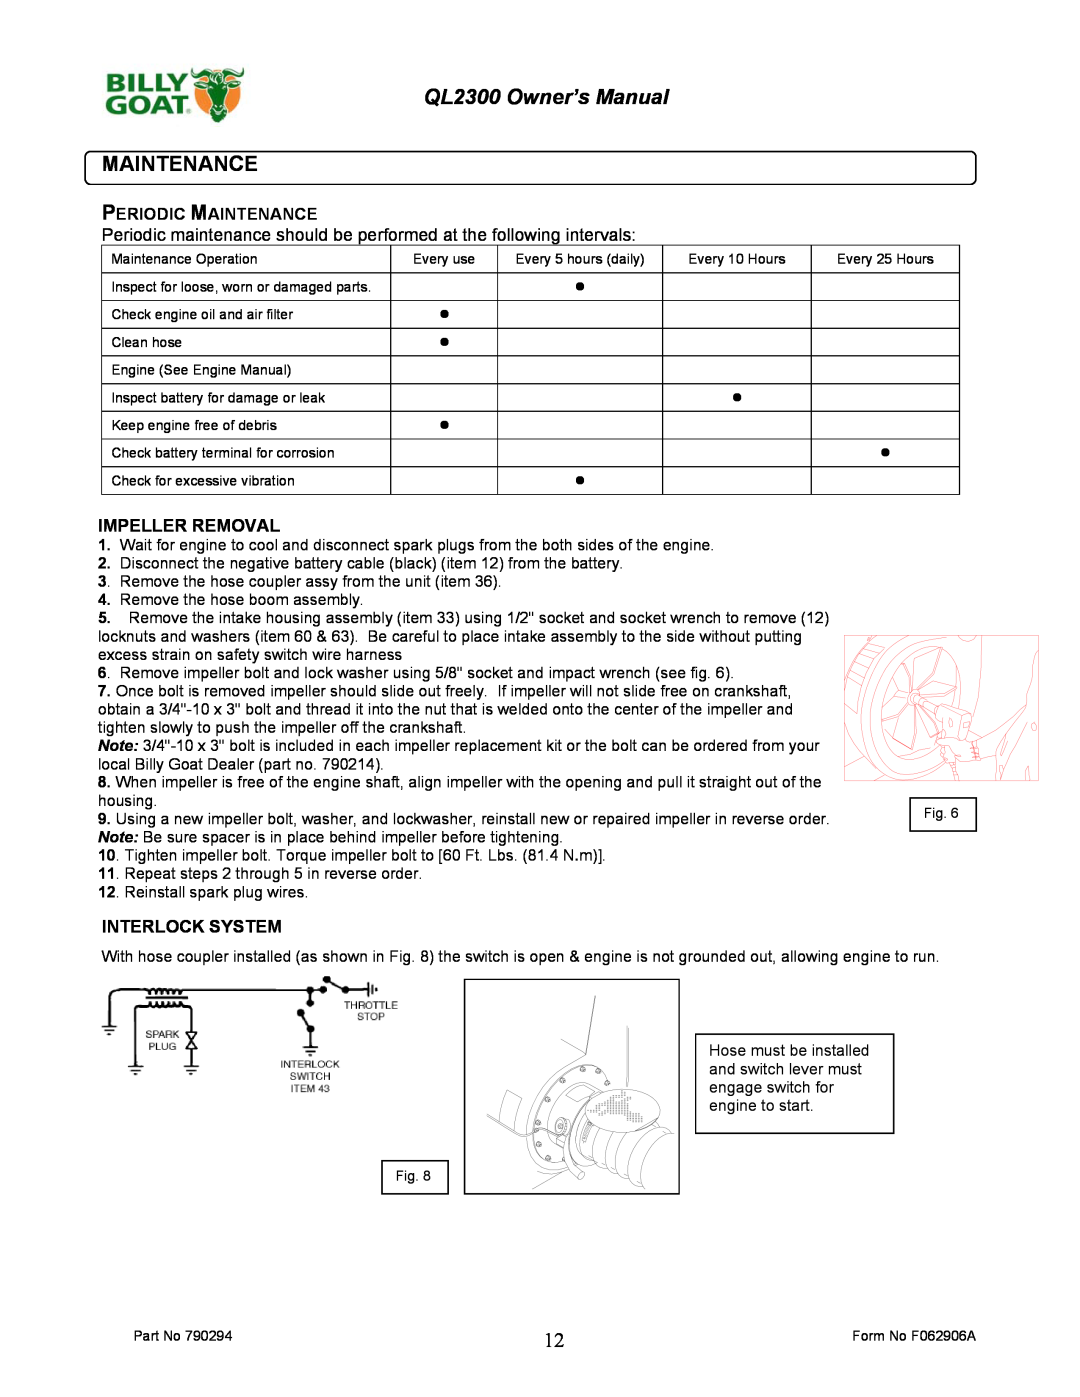 Billy Goat QL2300KO owner manual QL2300 Owner’s Manual, Periodic Maintenance, Impeller Removal, Interlock System 